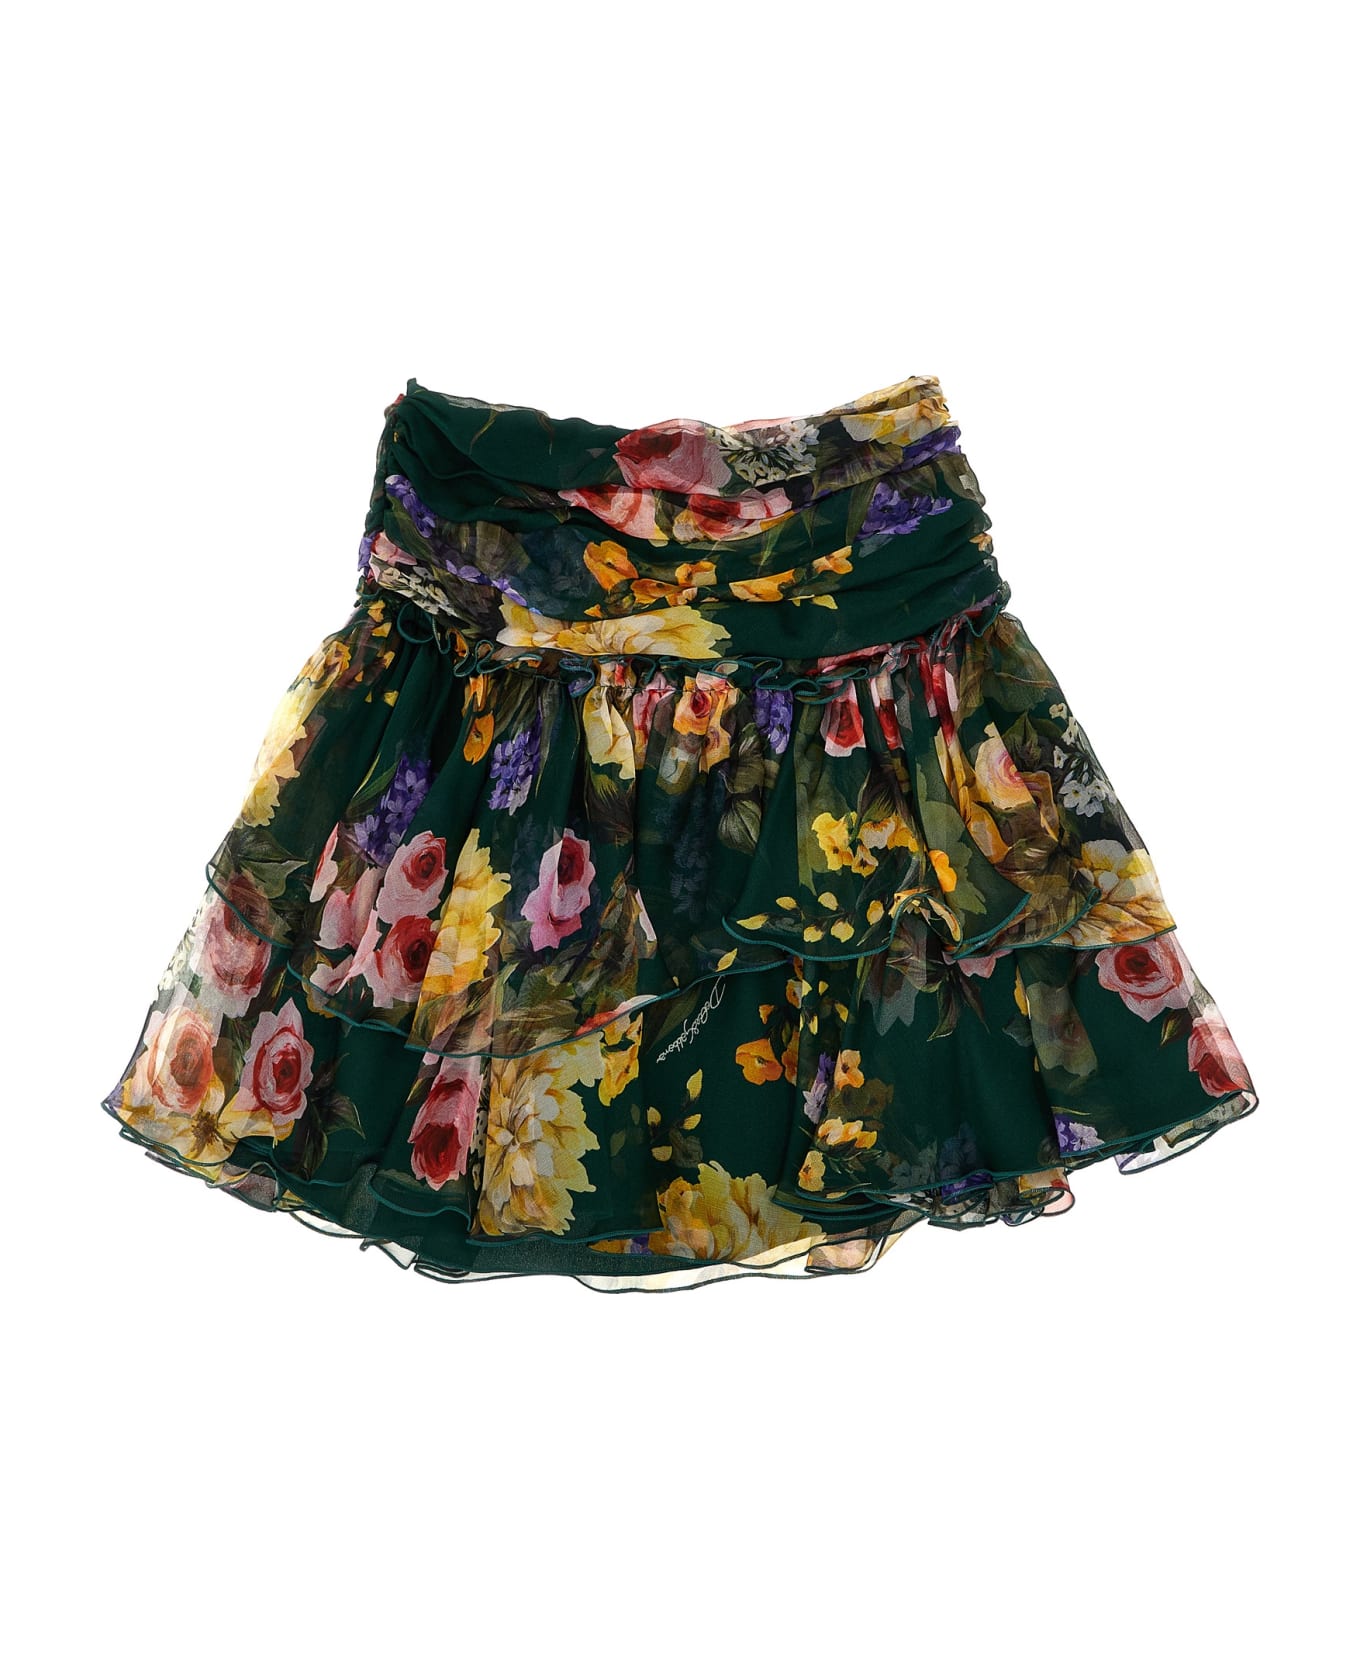 Dolce & Gabbana Floral Chiffon Skirt - Multicolor